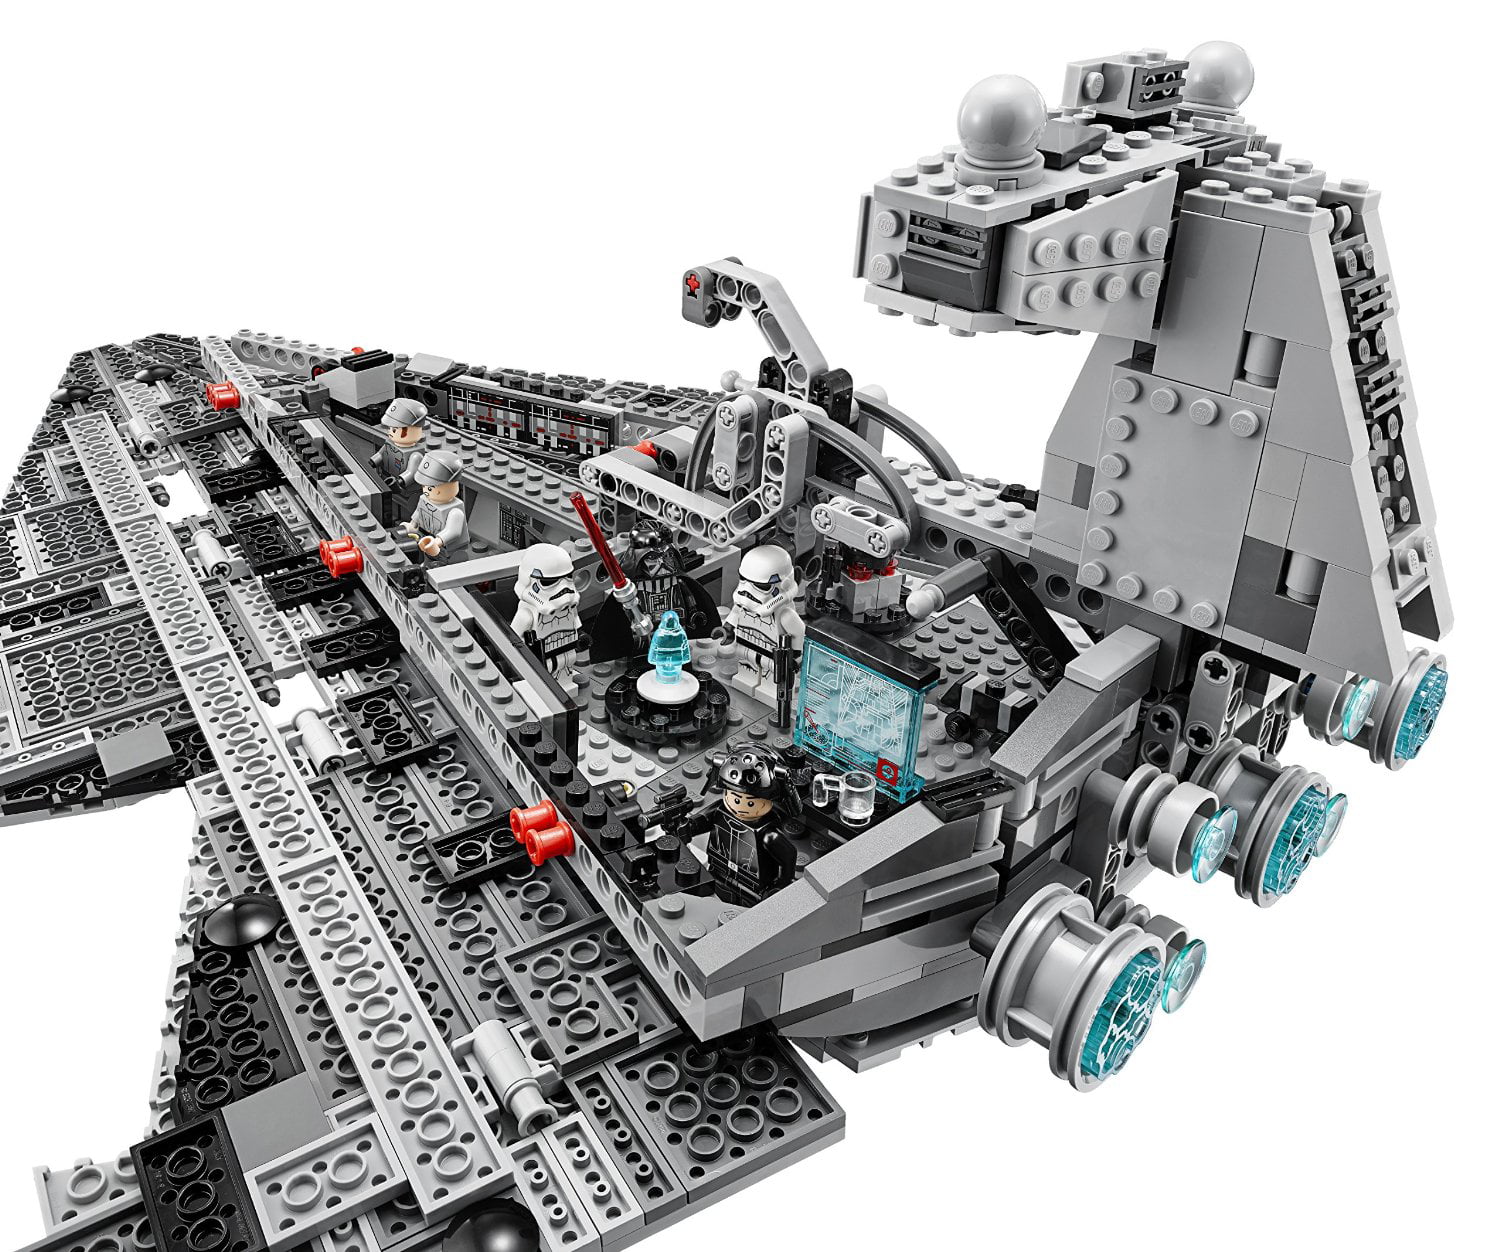 LEGO® Star Wars? Imperial Destroyer Kids Building Playset | 75055